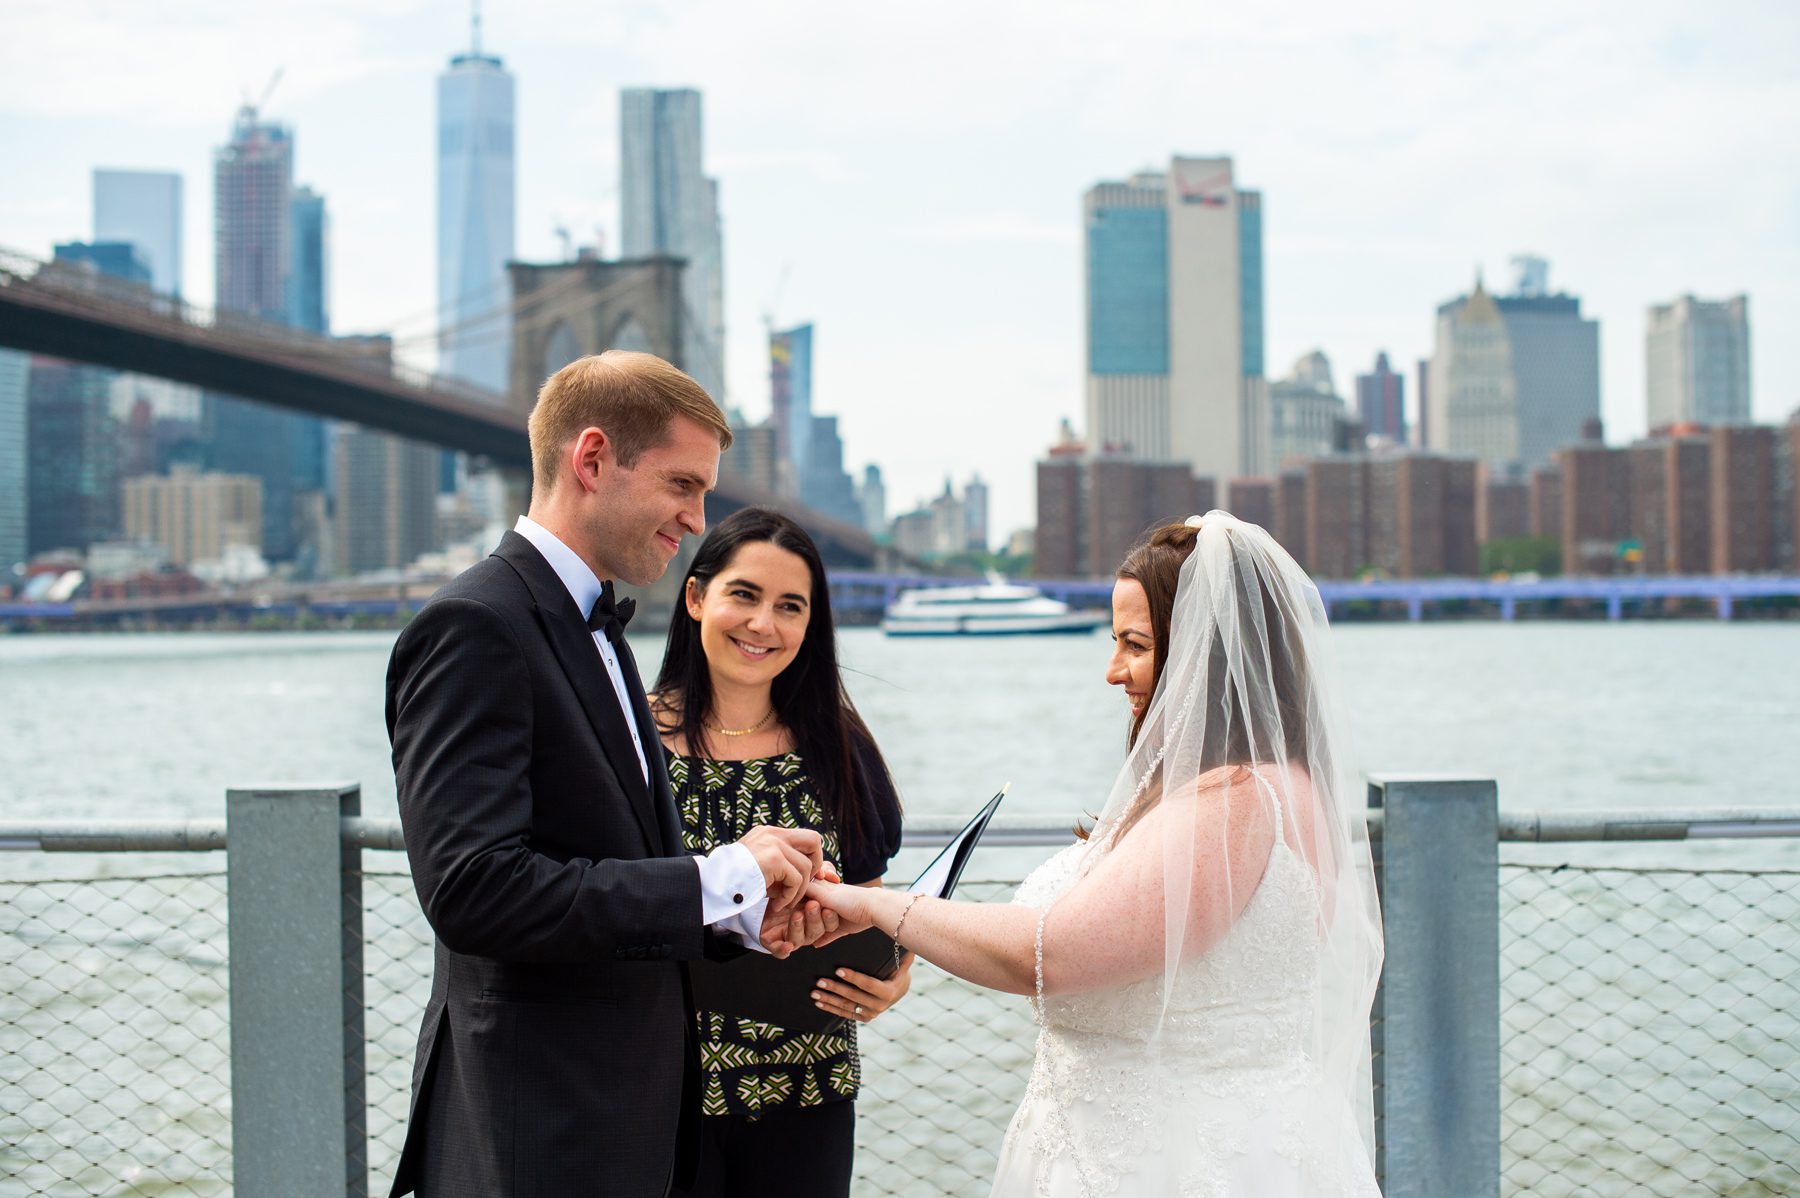 Brooklyn Bridge Park Wedding Ceremony 